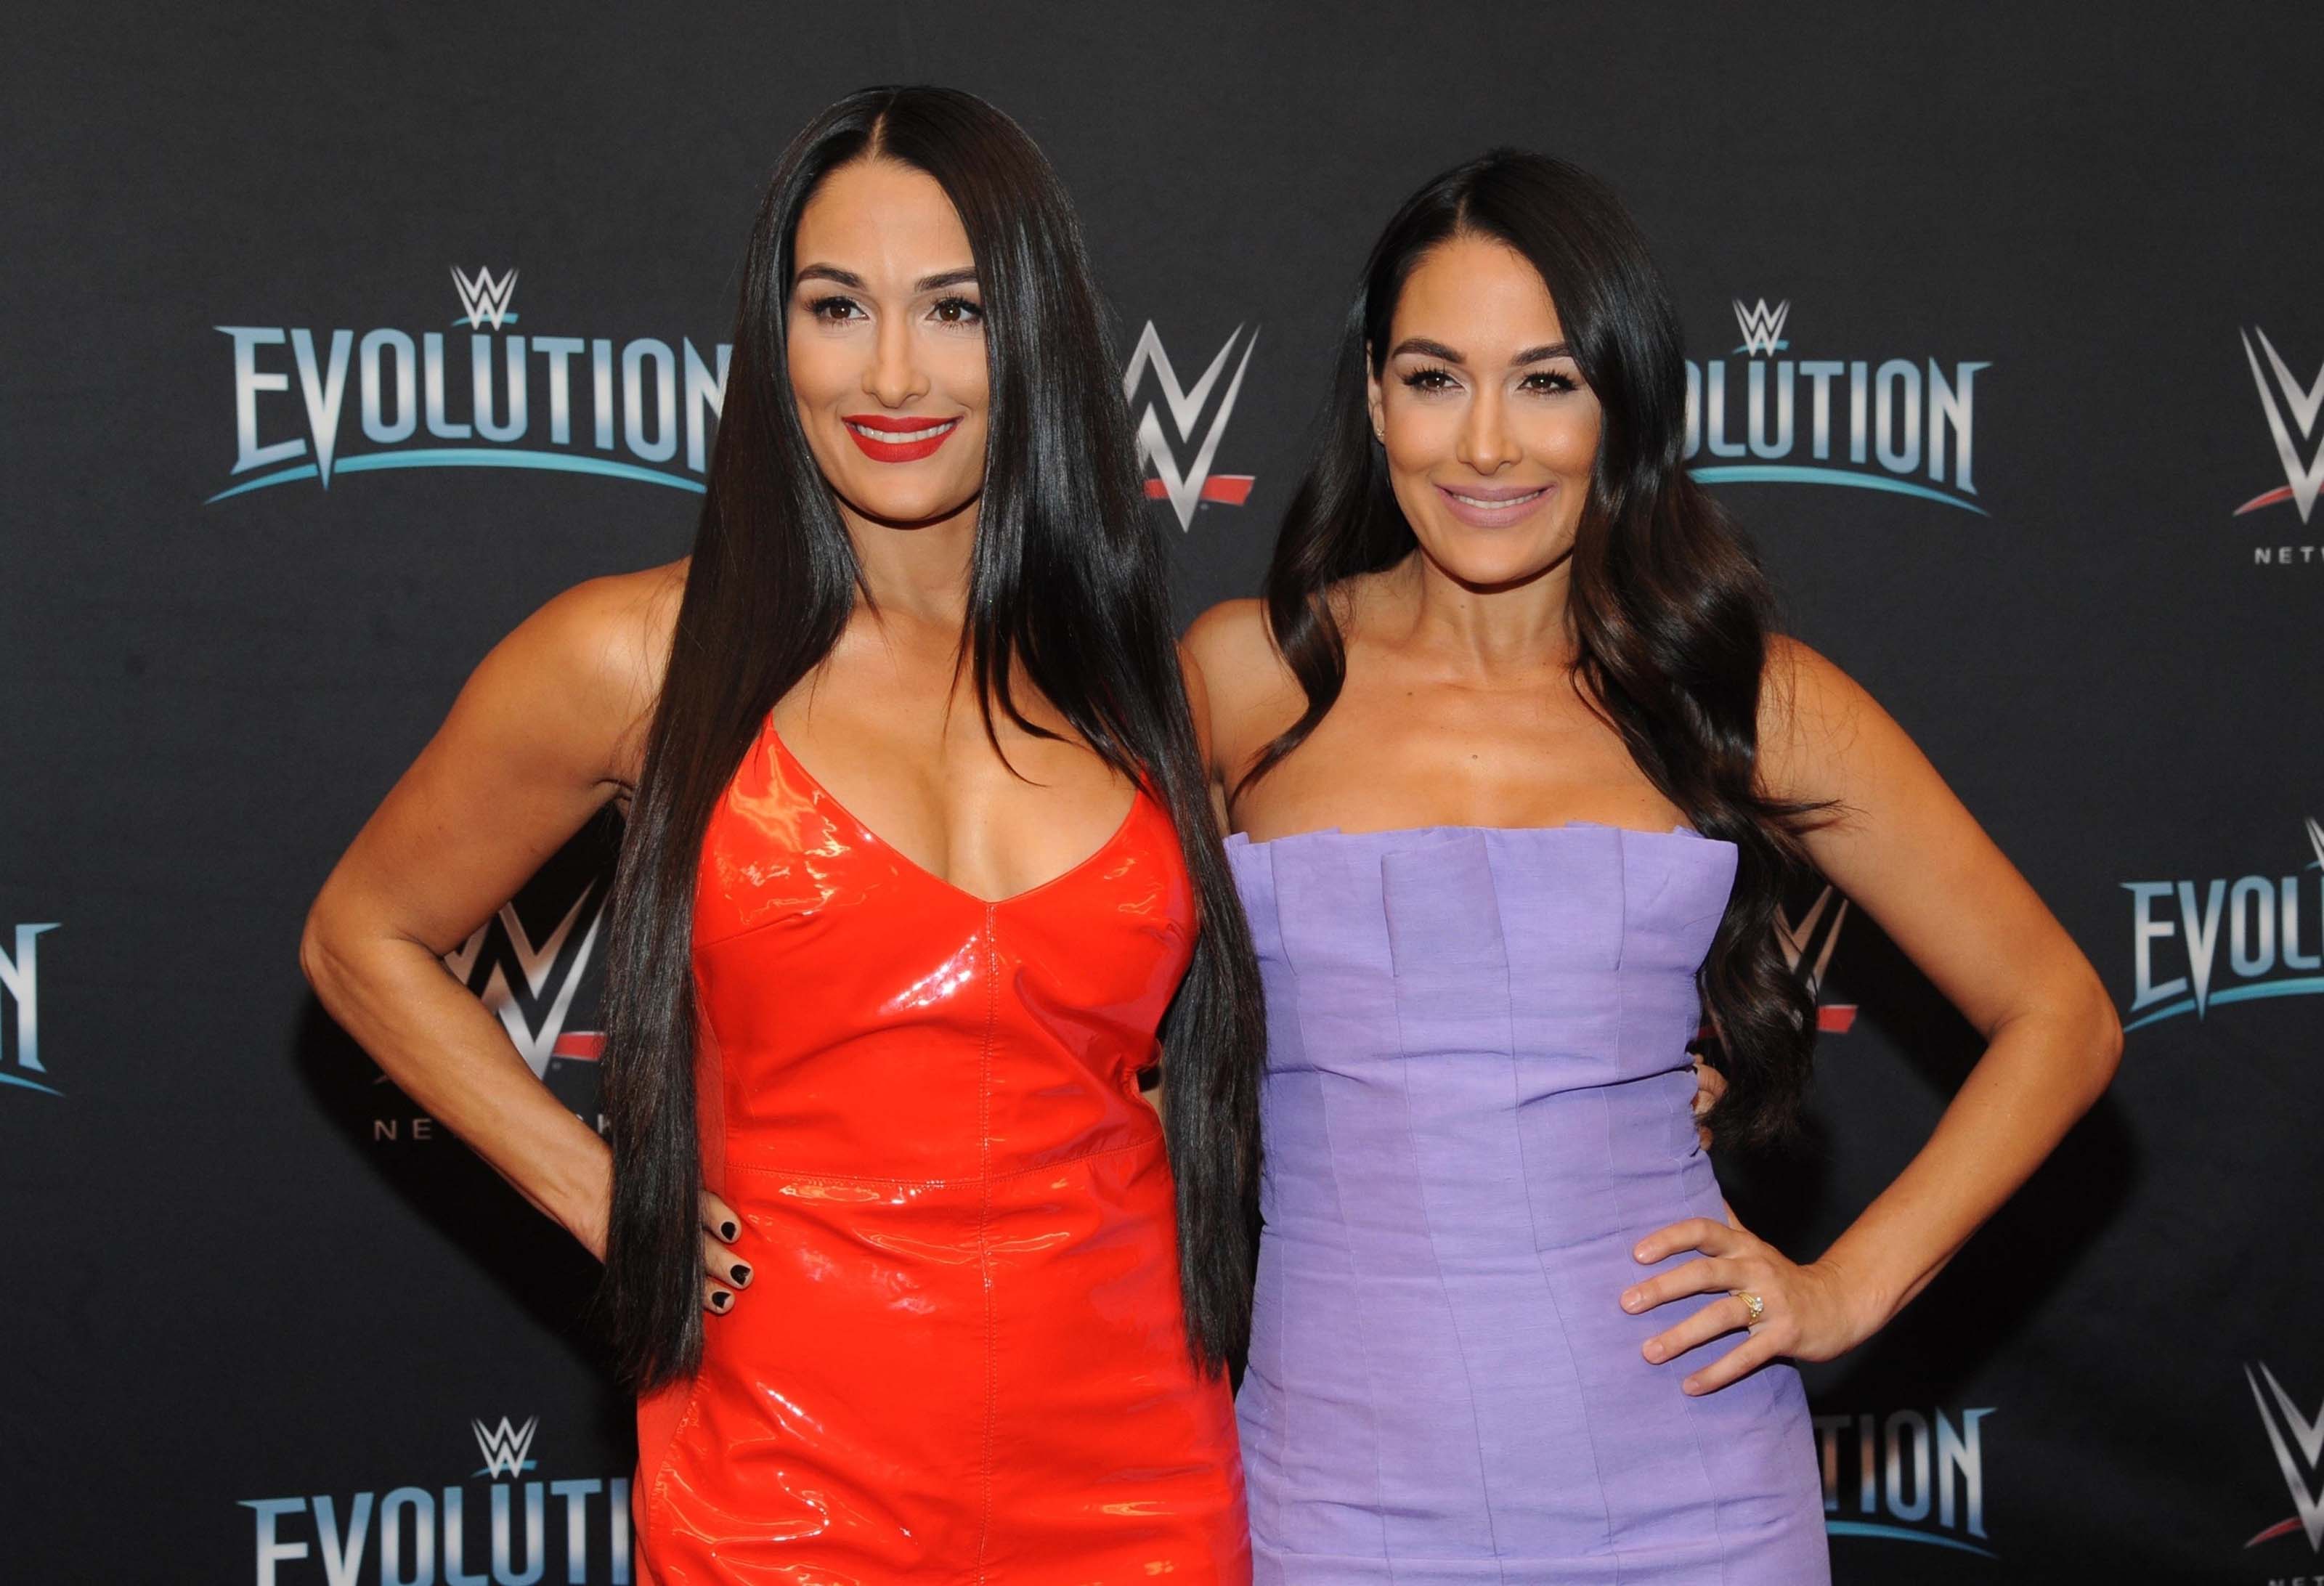 Nikki & Brie Bella attend WWE’s first ever all-women’s event